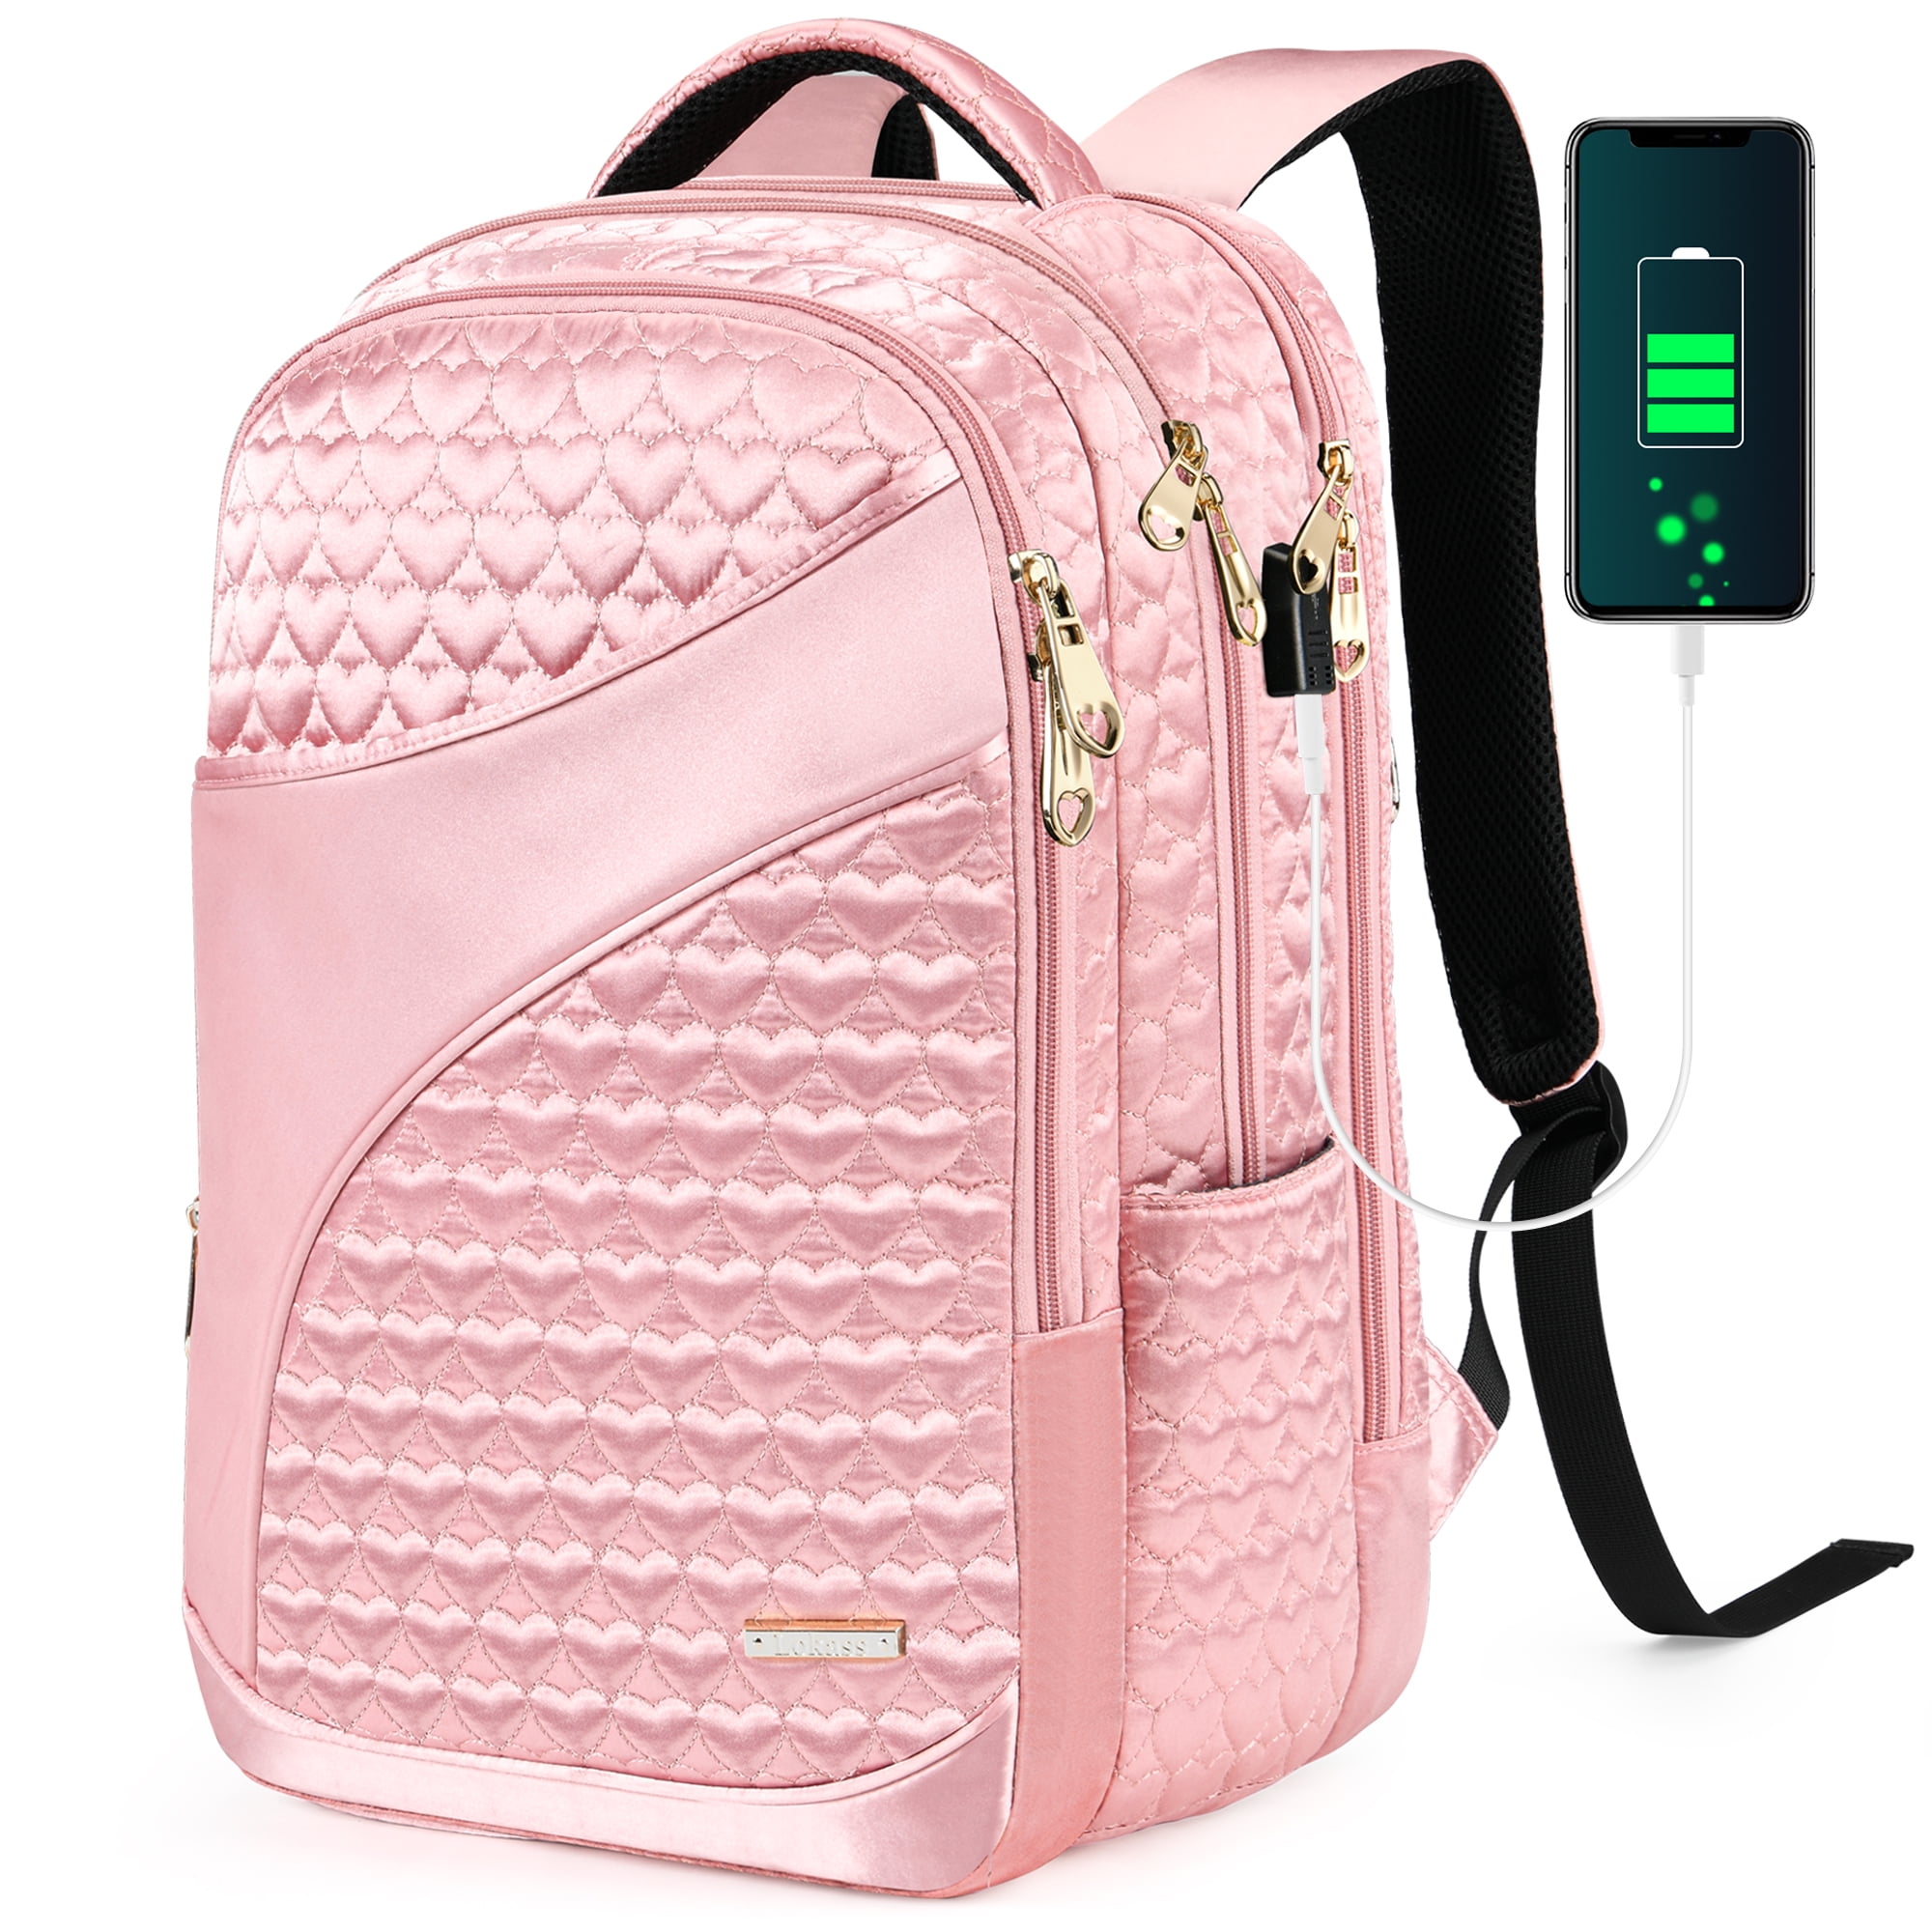 17 Inch Travel Laptop Backpack for Men Women, Aokur Extra Larger